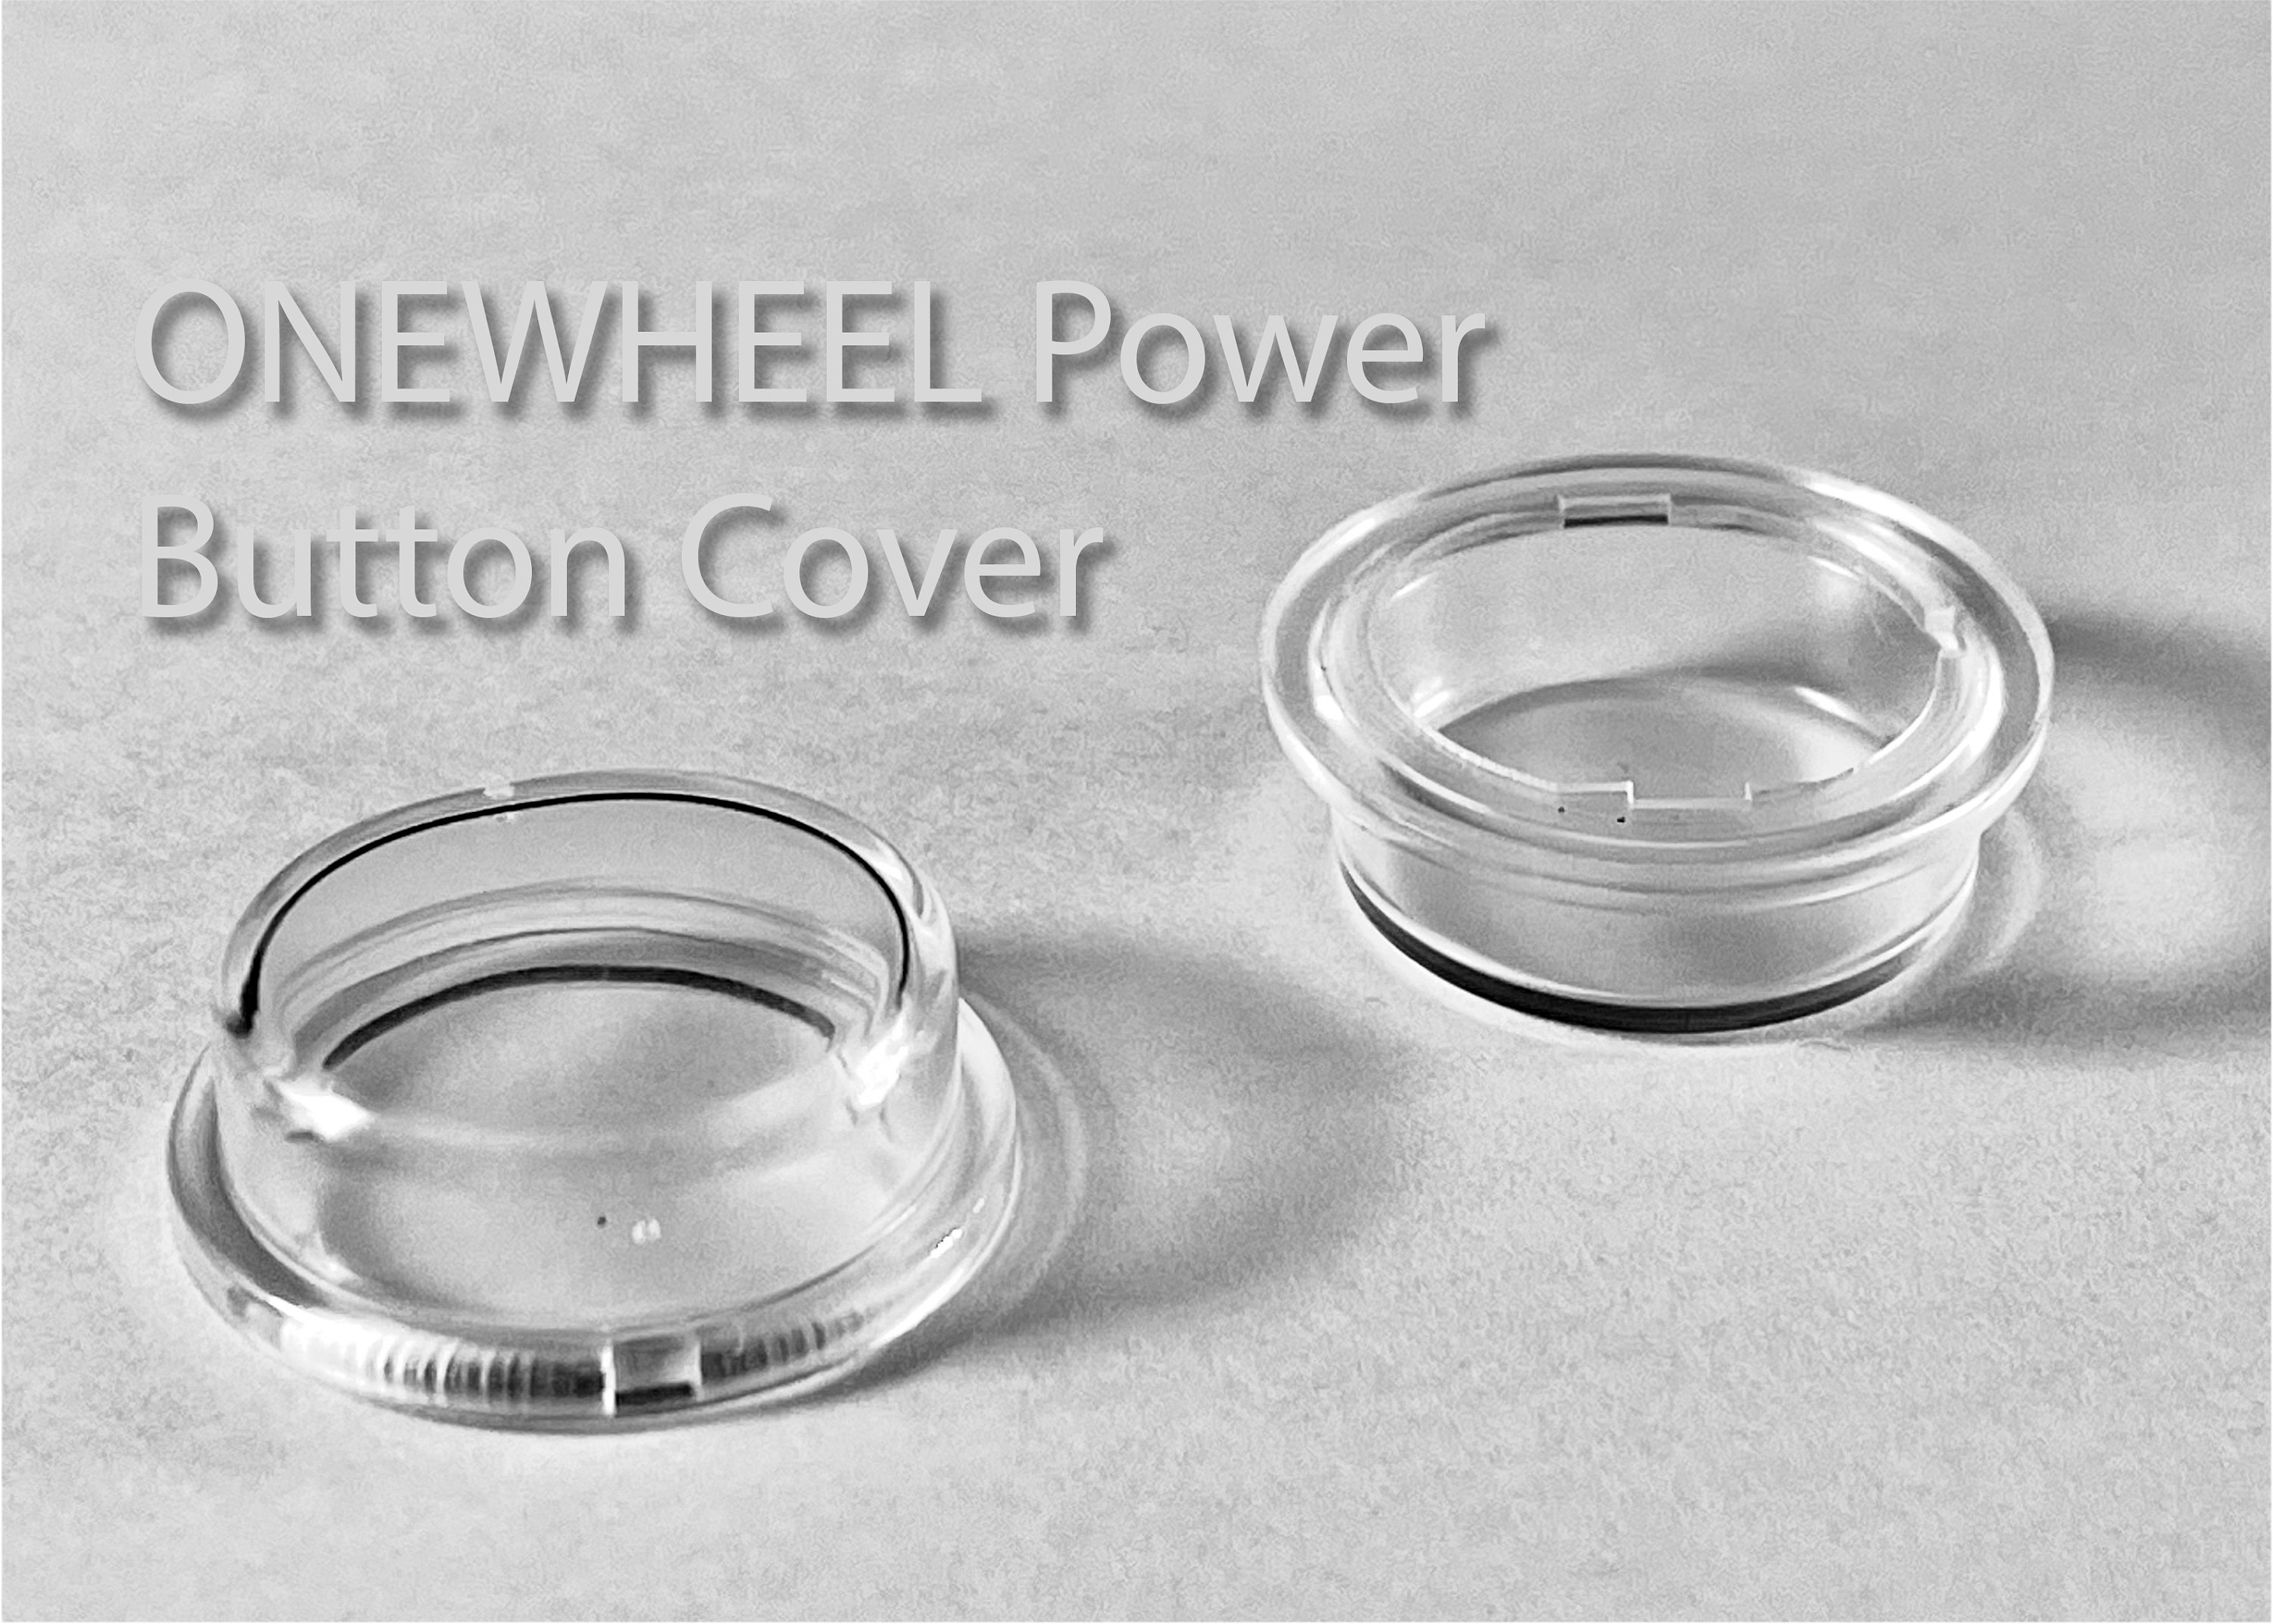 FF Power Button Cover for Onewheel XR - FlightFins